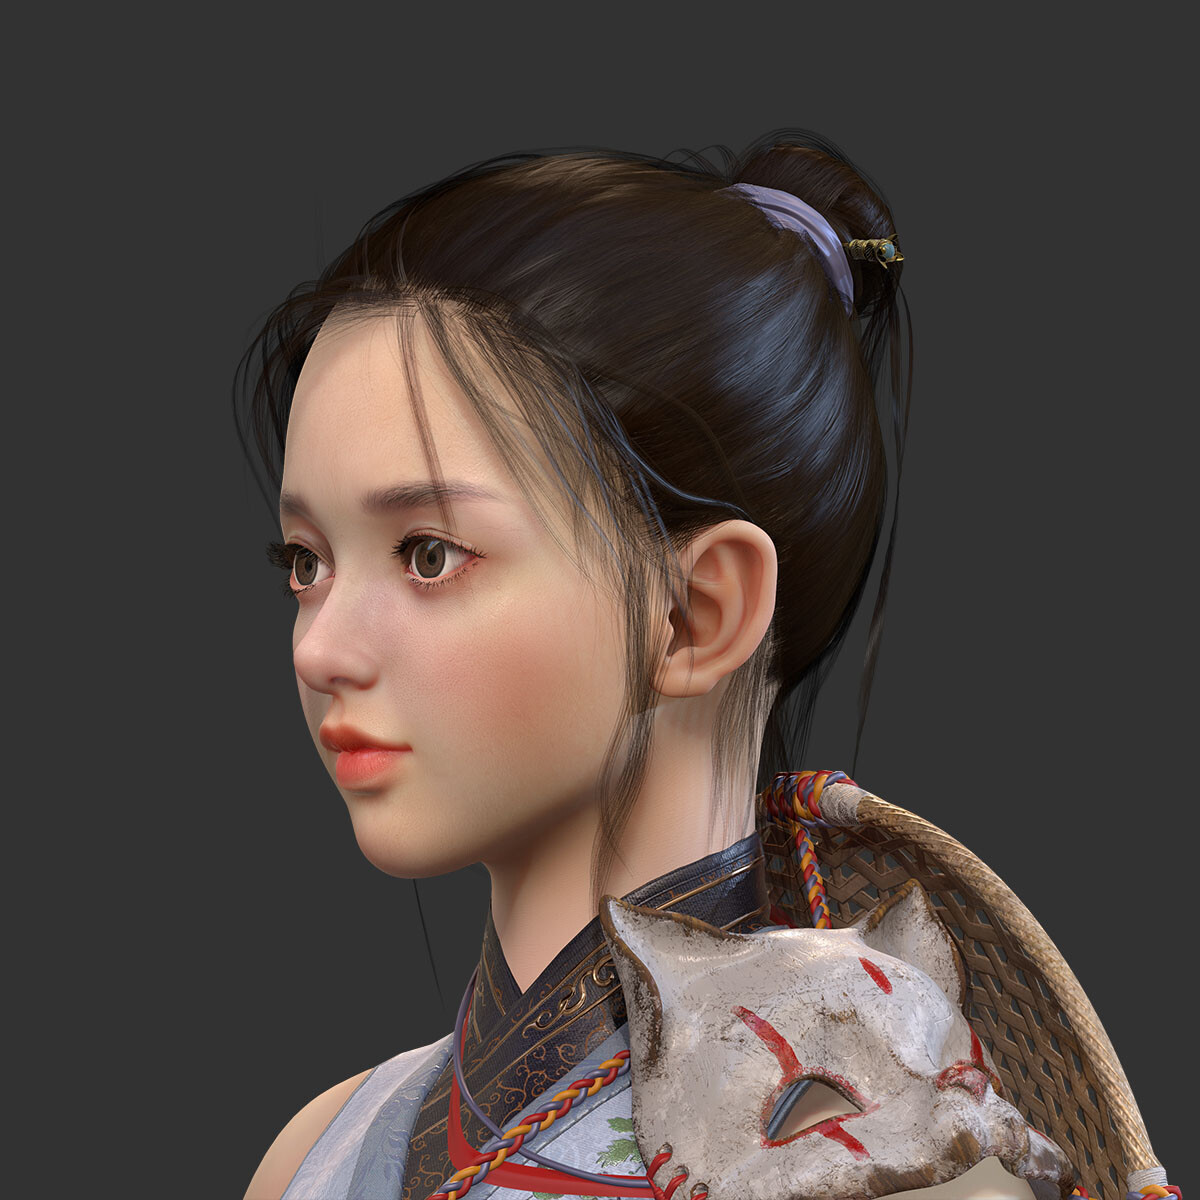 ArtStation - Next Age Game Character, Knight-errant Girl